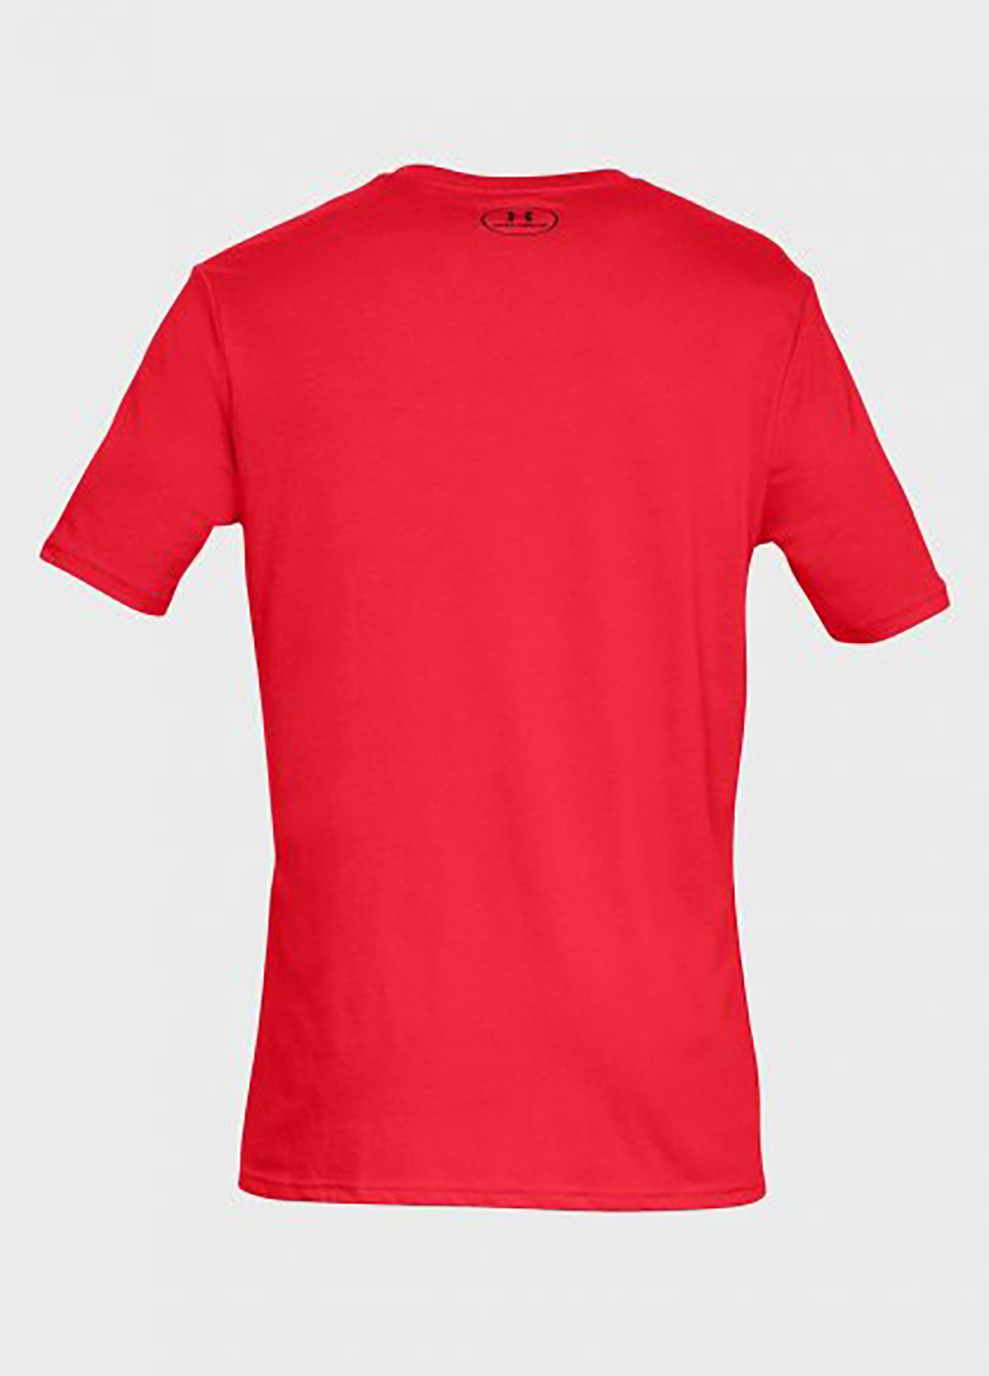 Красная футболкаportstyleogos красный муж Under Armour